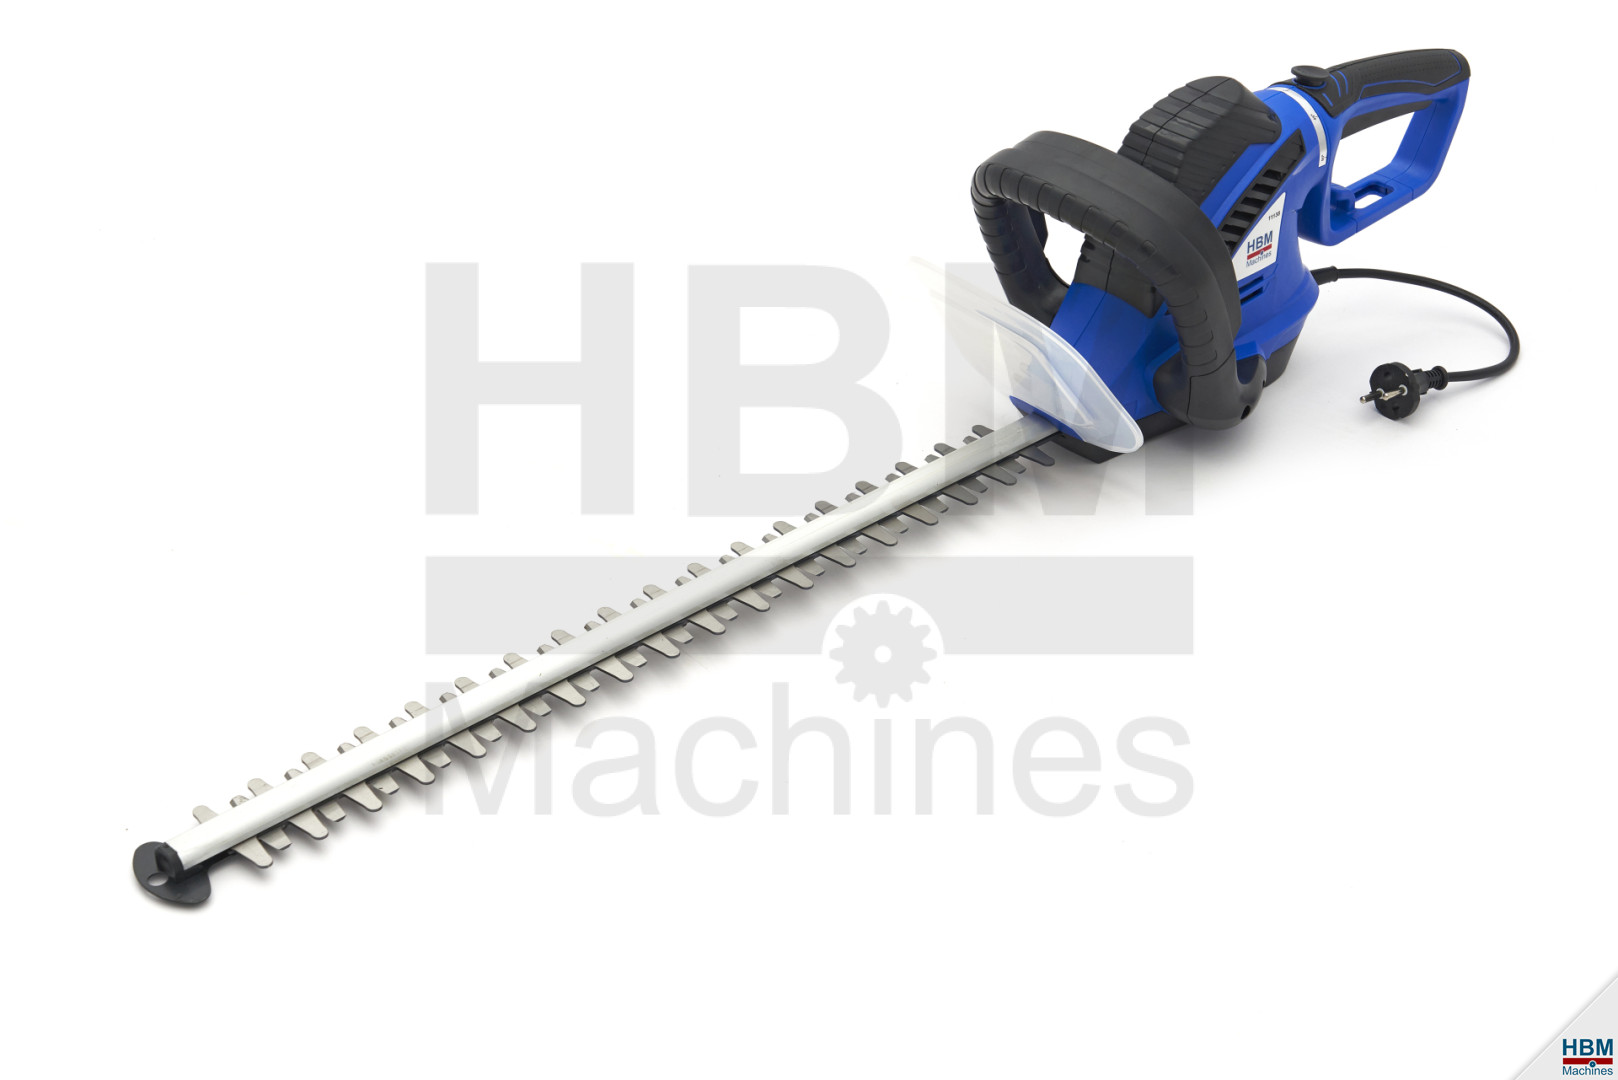 wol bevestig alstublieft essay HBM 610 mm Elektrische Heggenschaar - 710W | HBM Machines